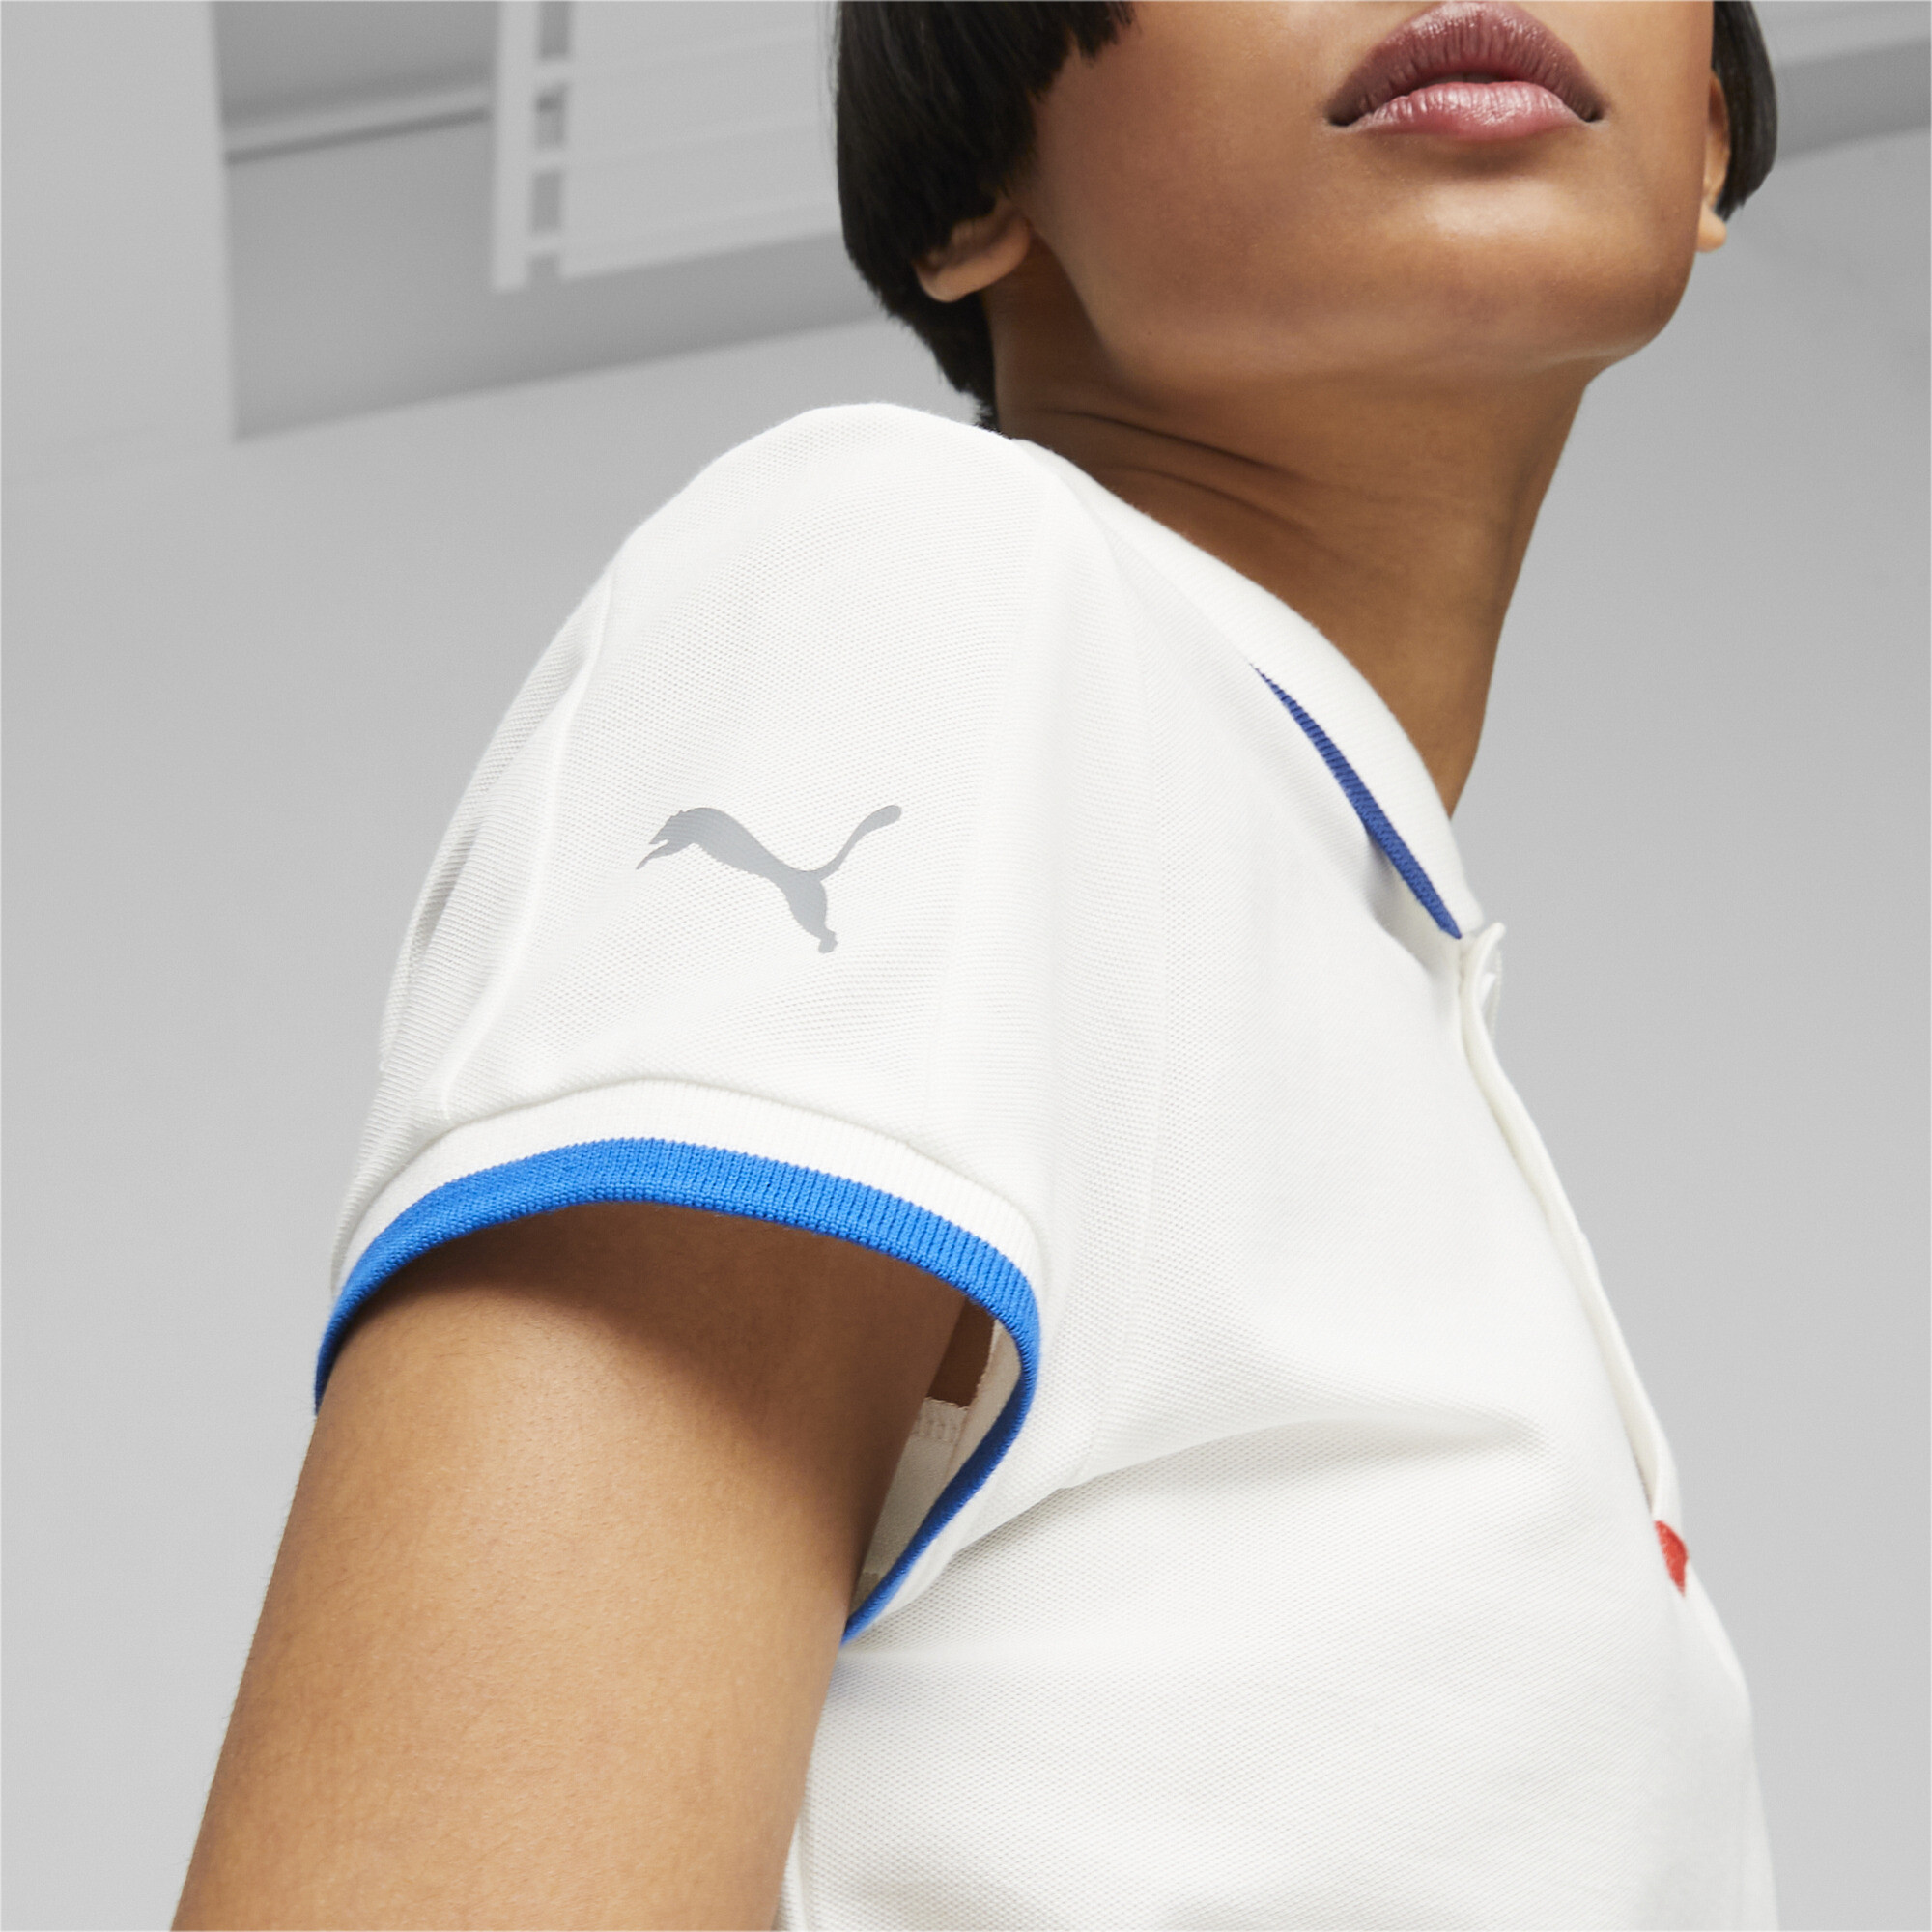 Women's Puma BMW M Motorsport's Polo Shirt T-Shirt, White T-Shirt, Clothing